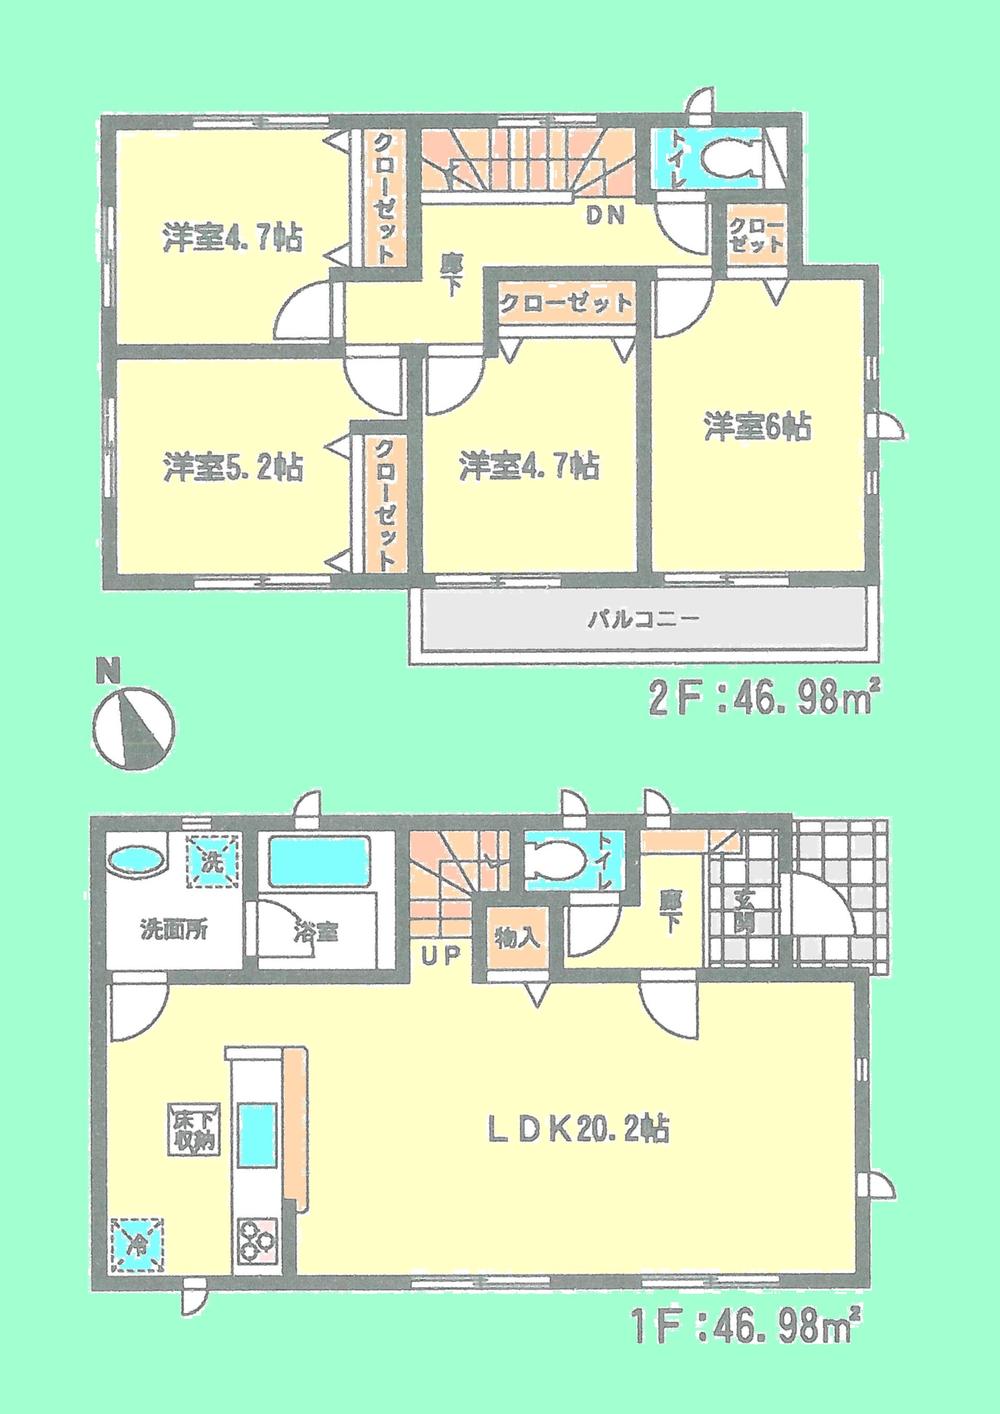 Floor plan. Price 19,800,000 yen, 4LDK, Land area 184.68 sq m , Building area 93.96 sq m